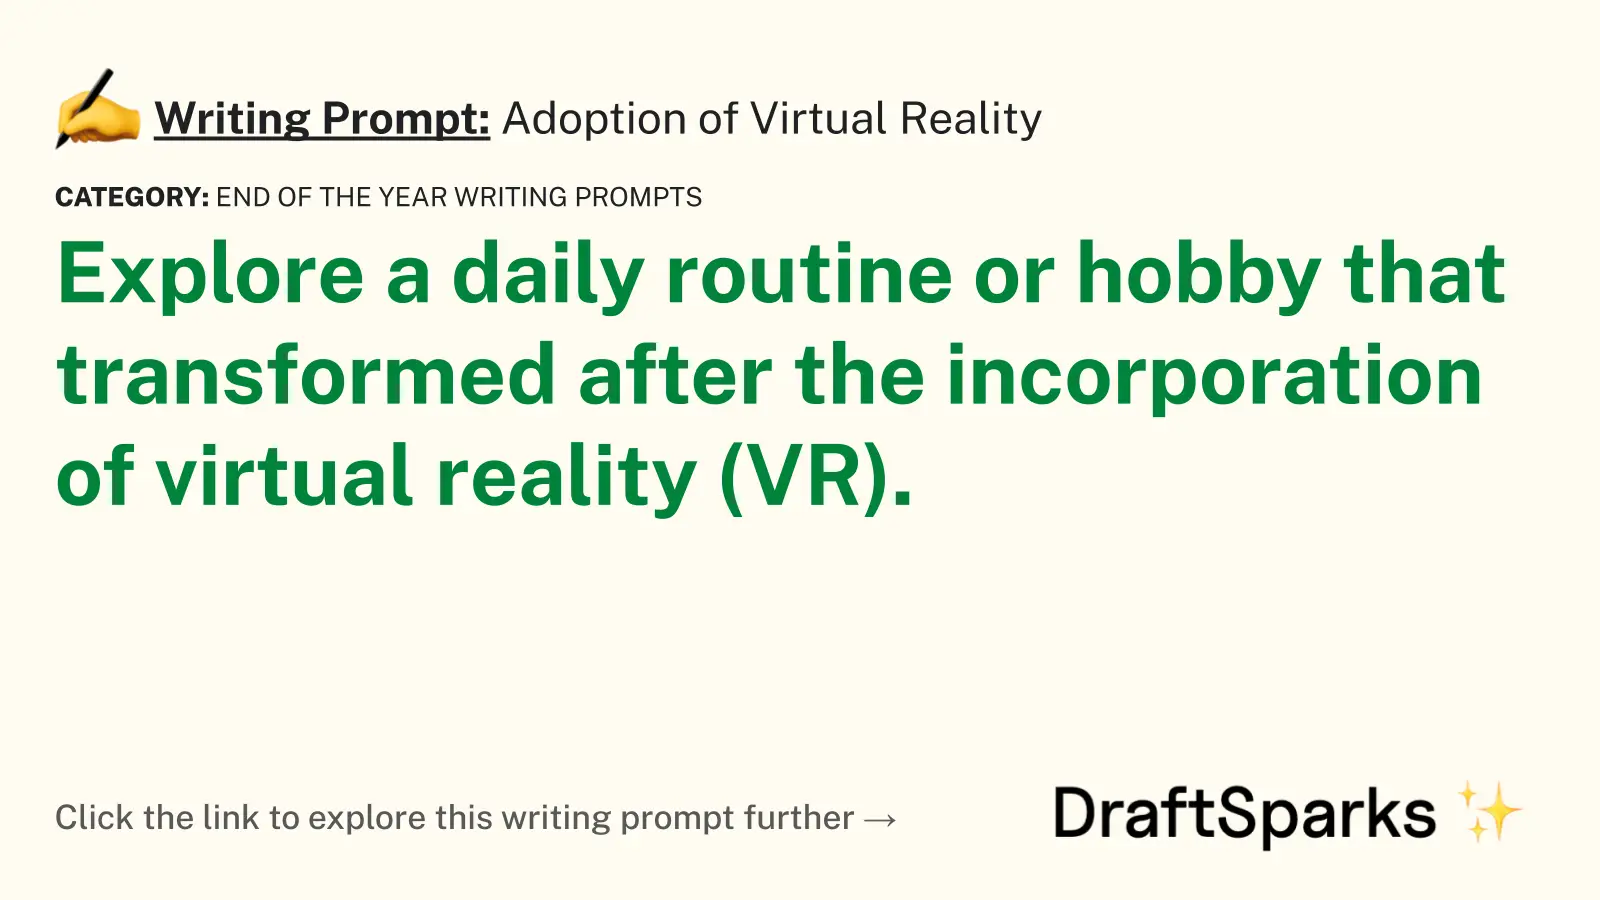 Adoption of Virtual Reality